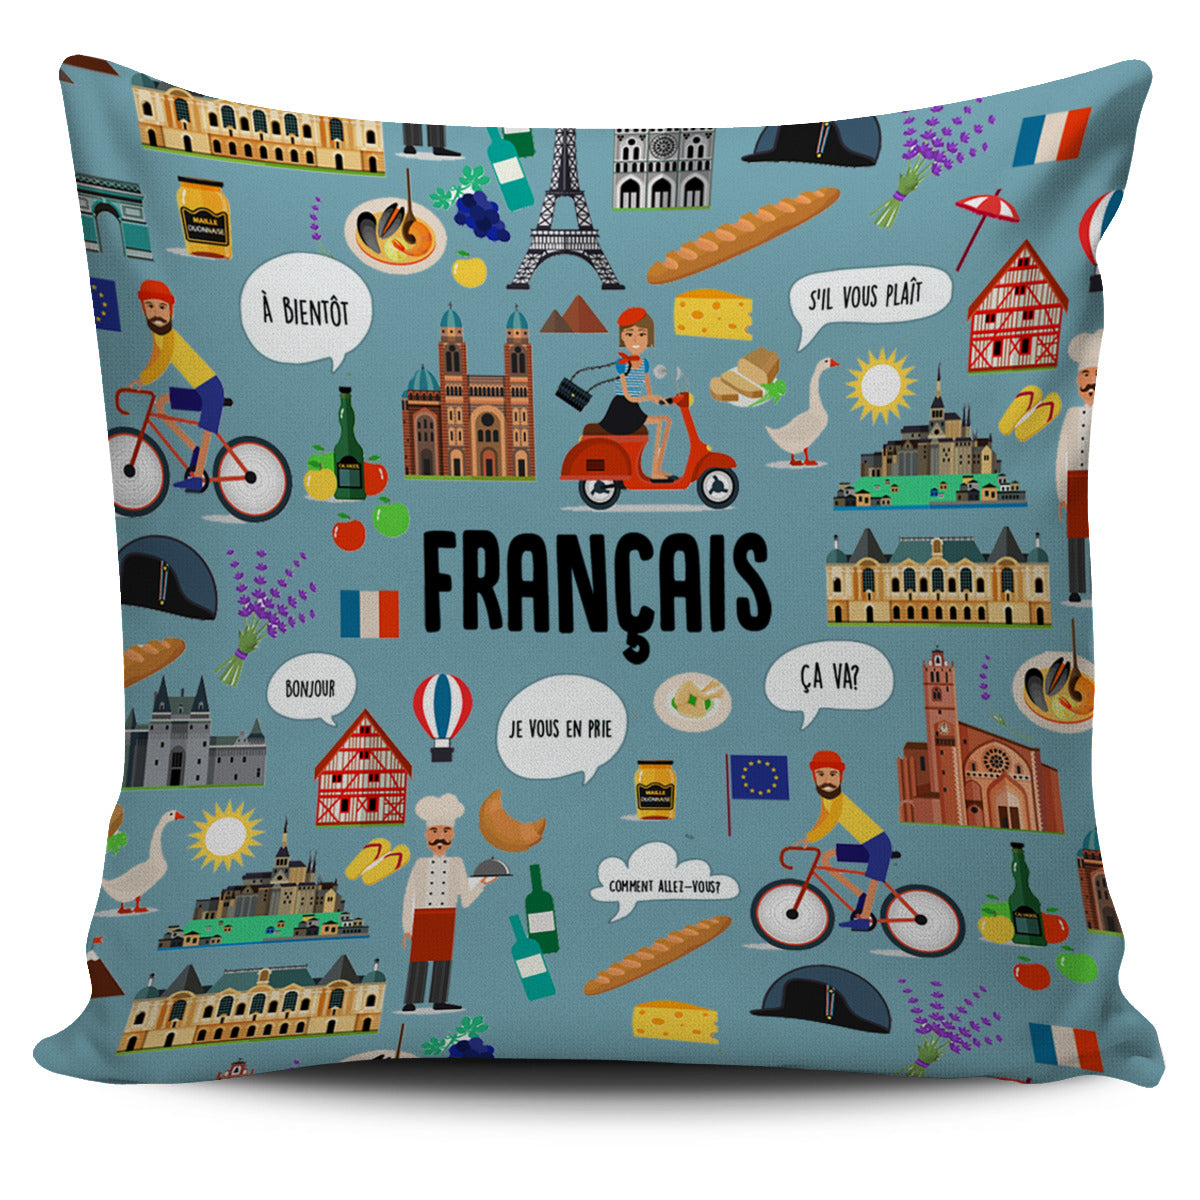 French Teacher Pillow Cover